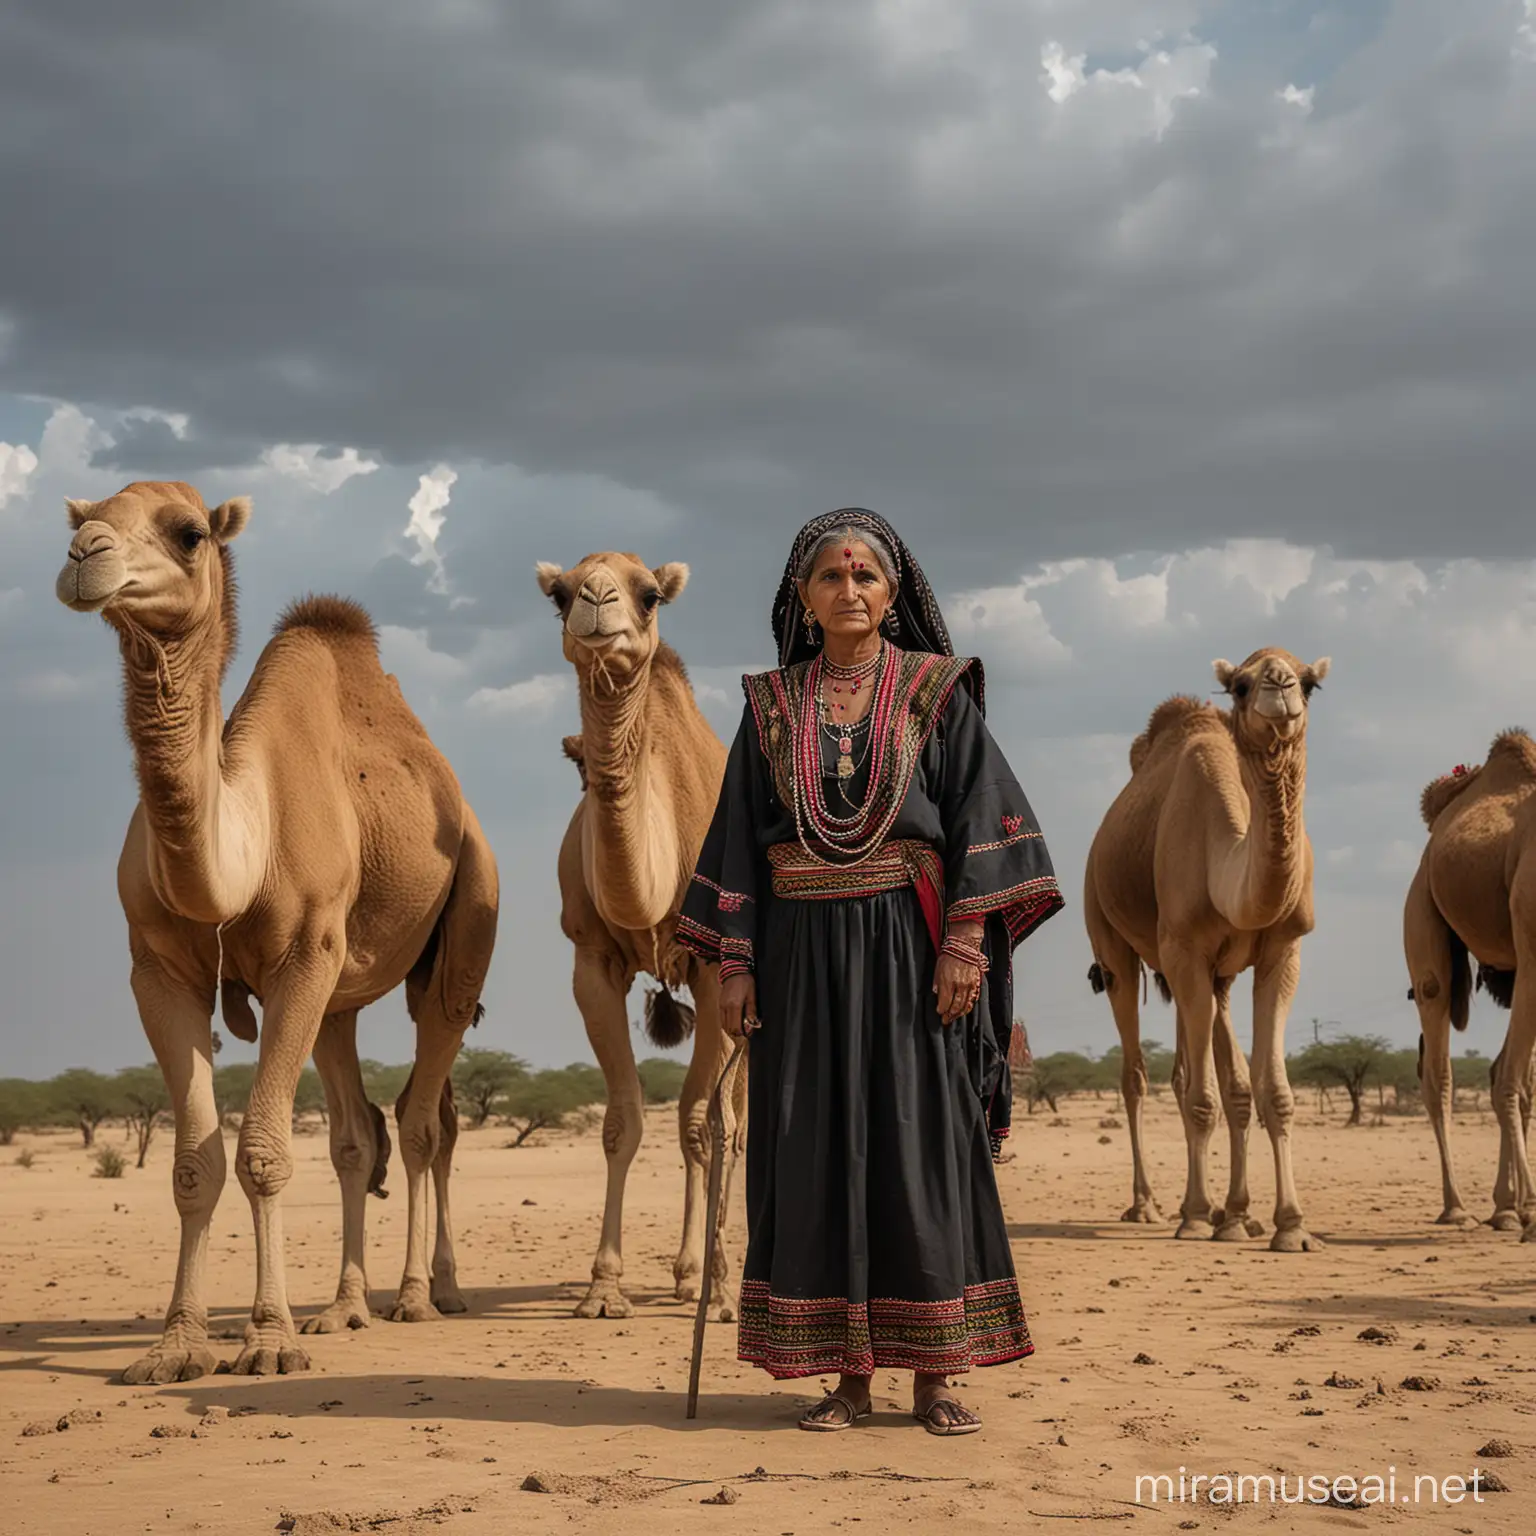 old rabari women gujarat black clothing fu ll total body is standing between camels in desert land schape by cloudy sky fuji xt 3